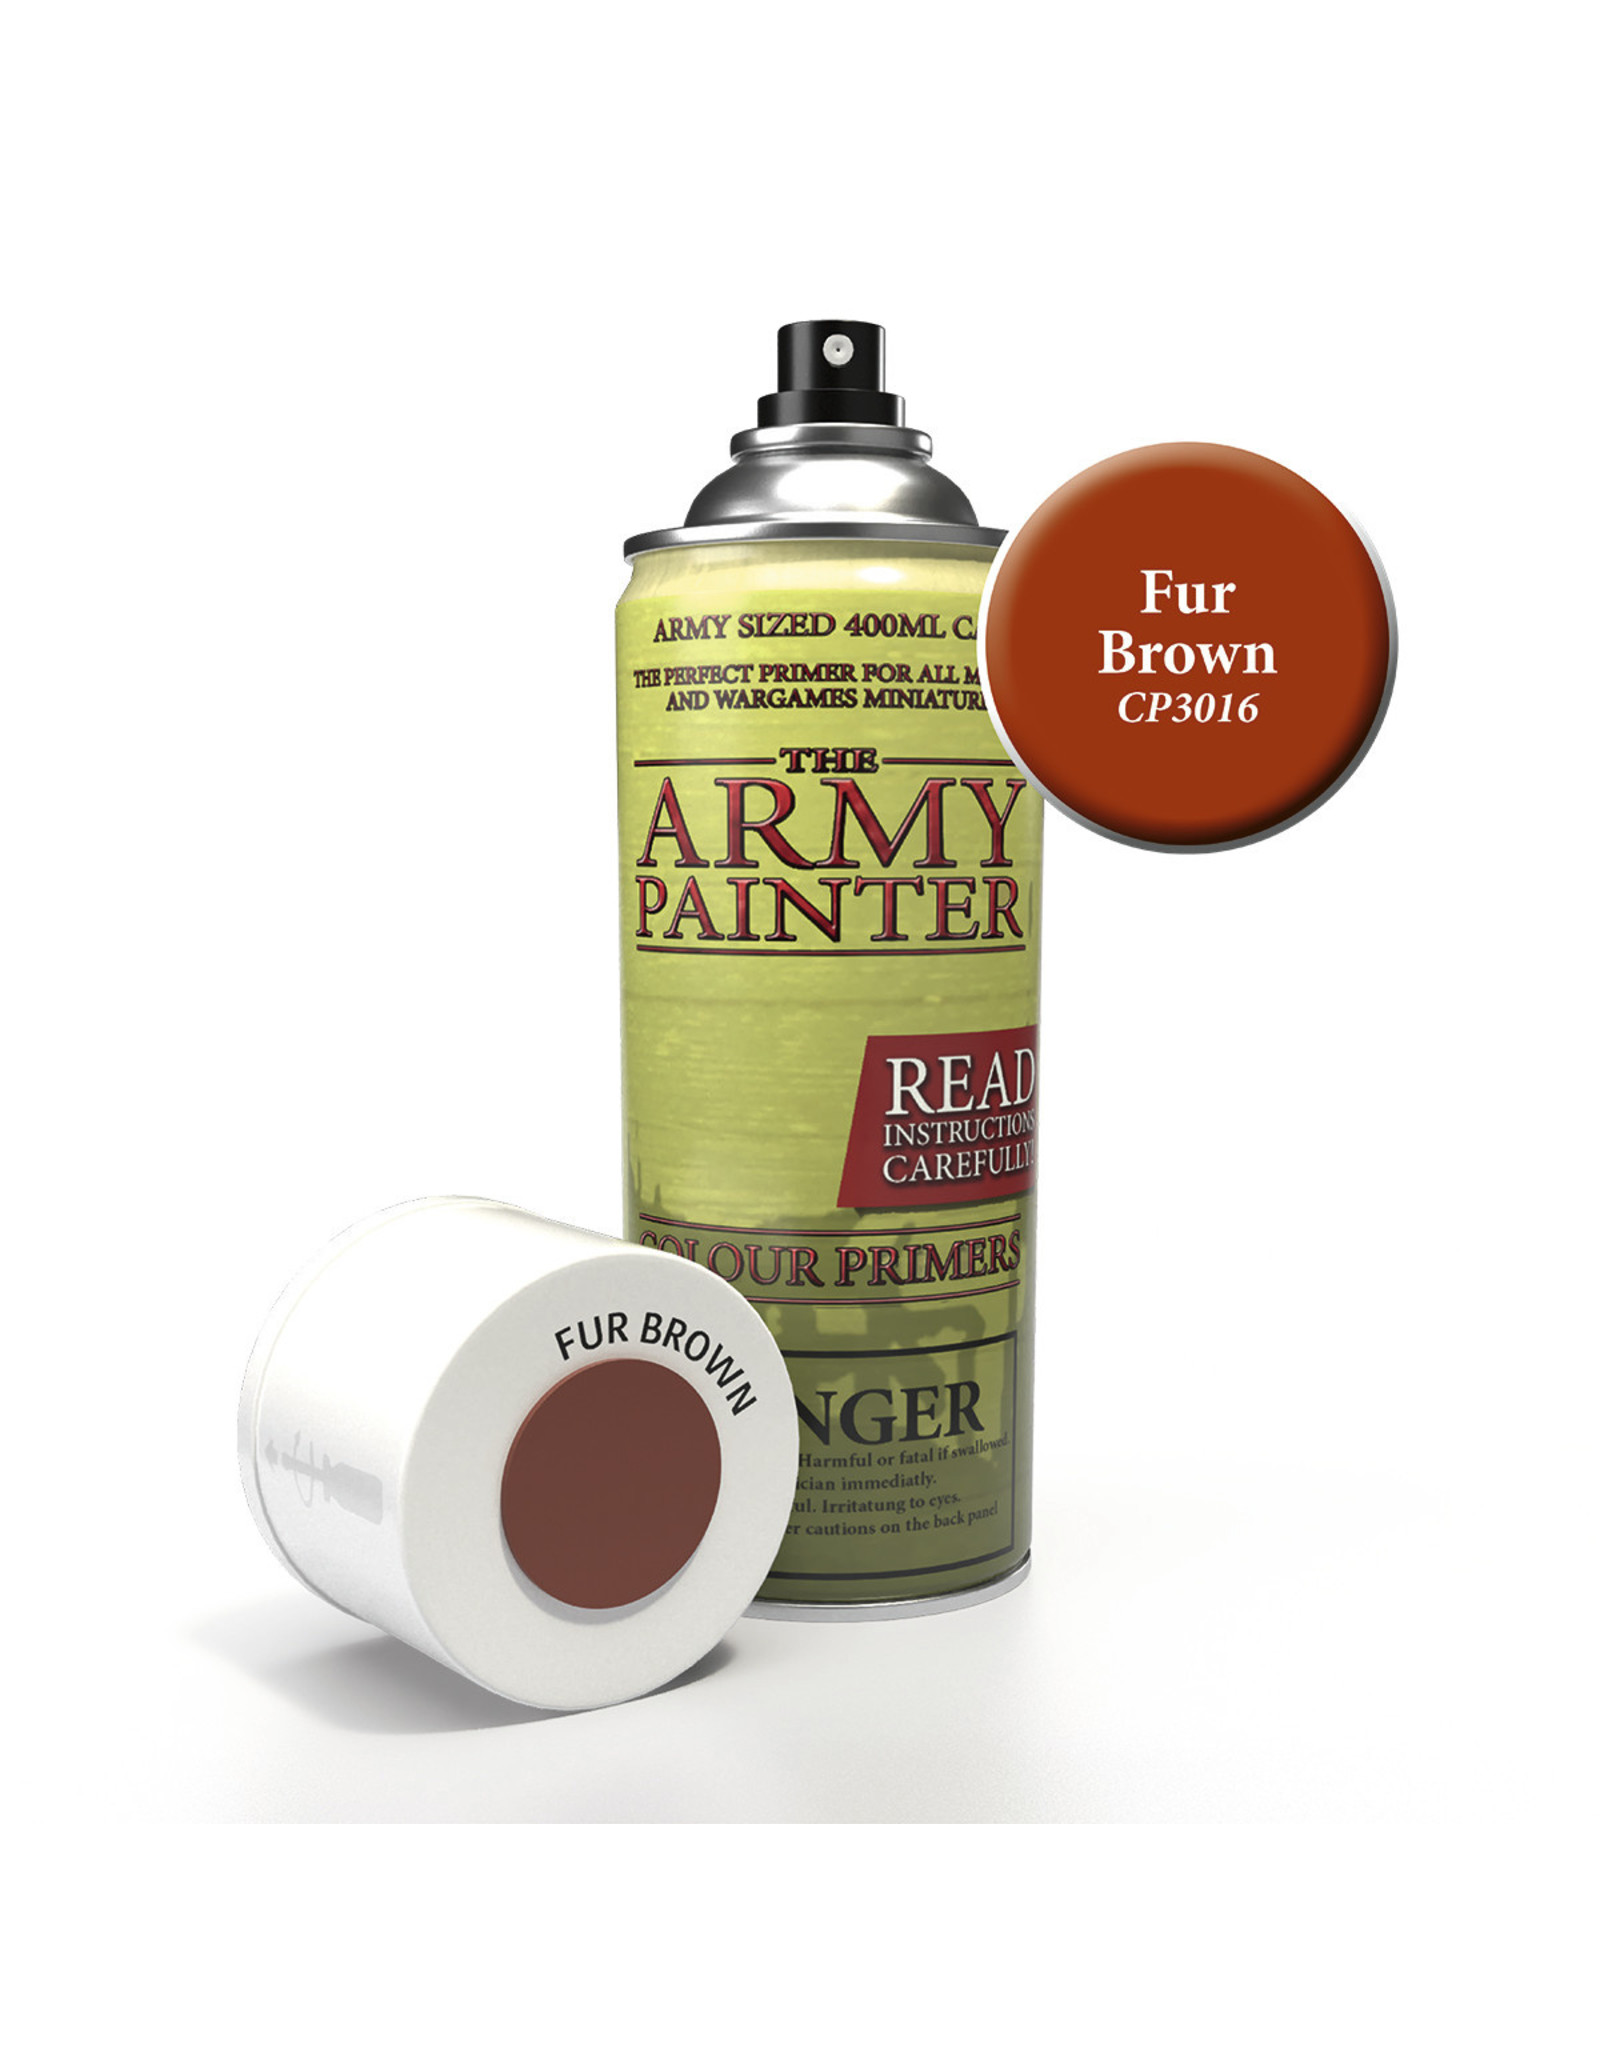 The Army Painter Colour Primer: Fur Brown